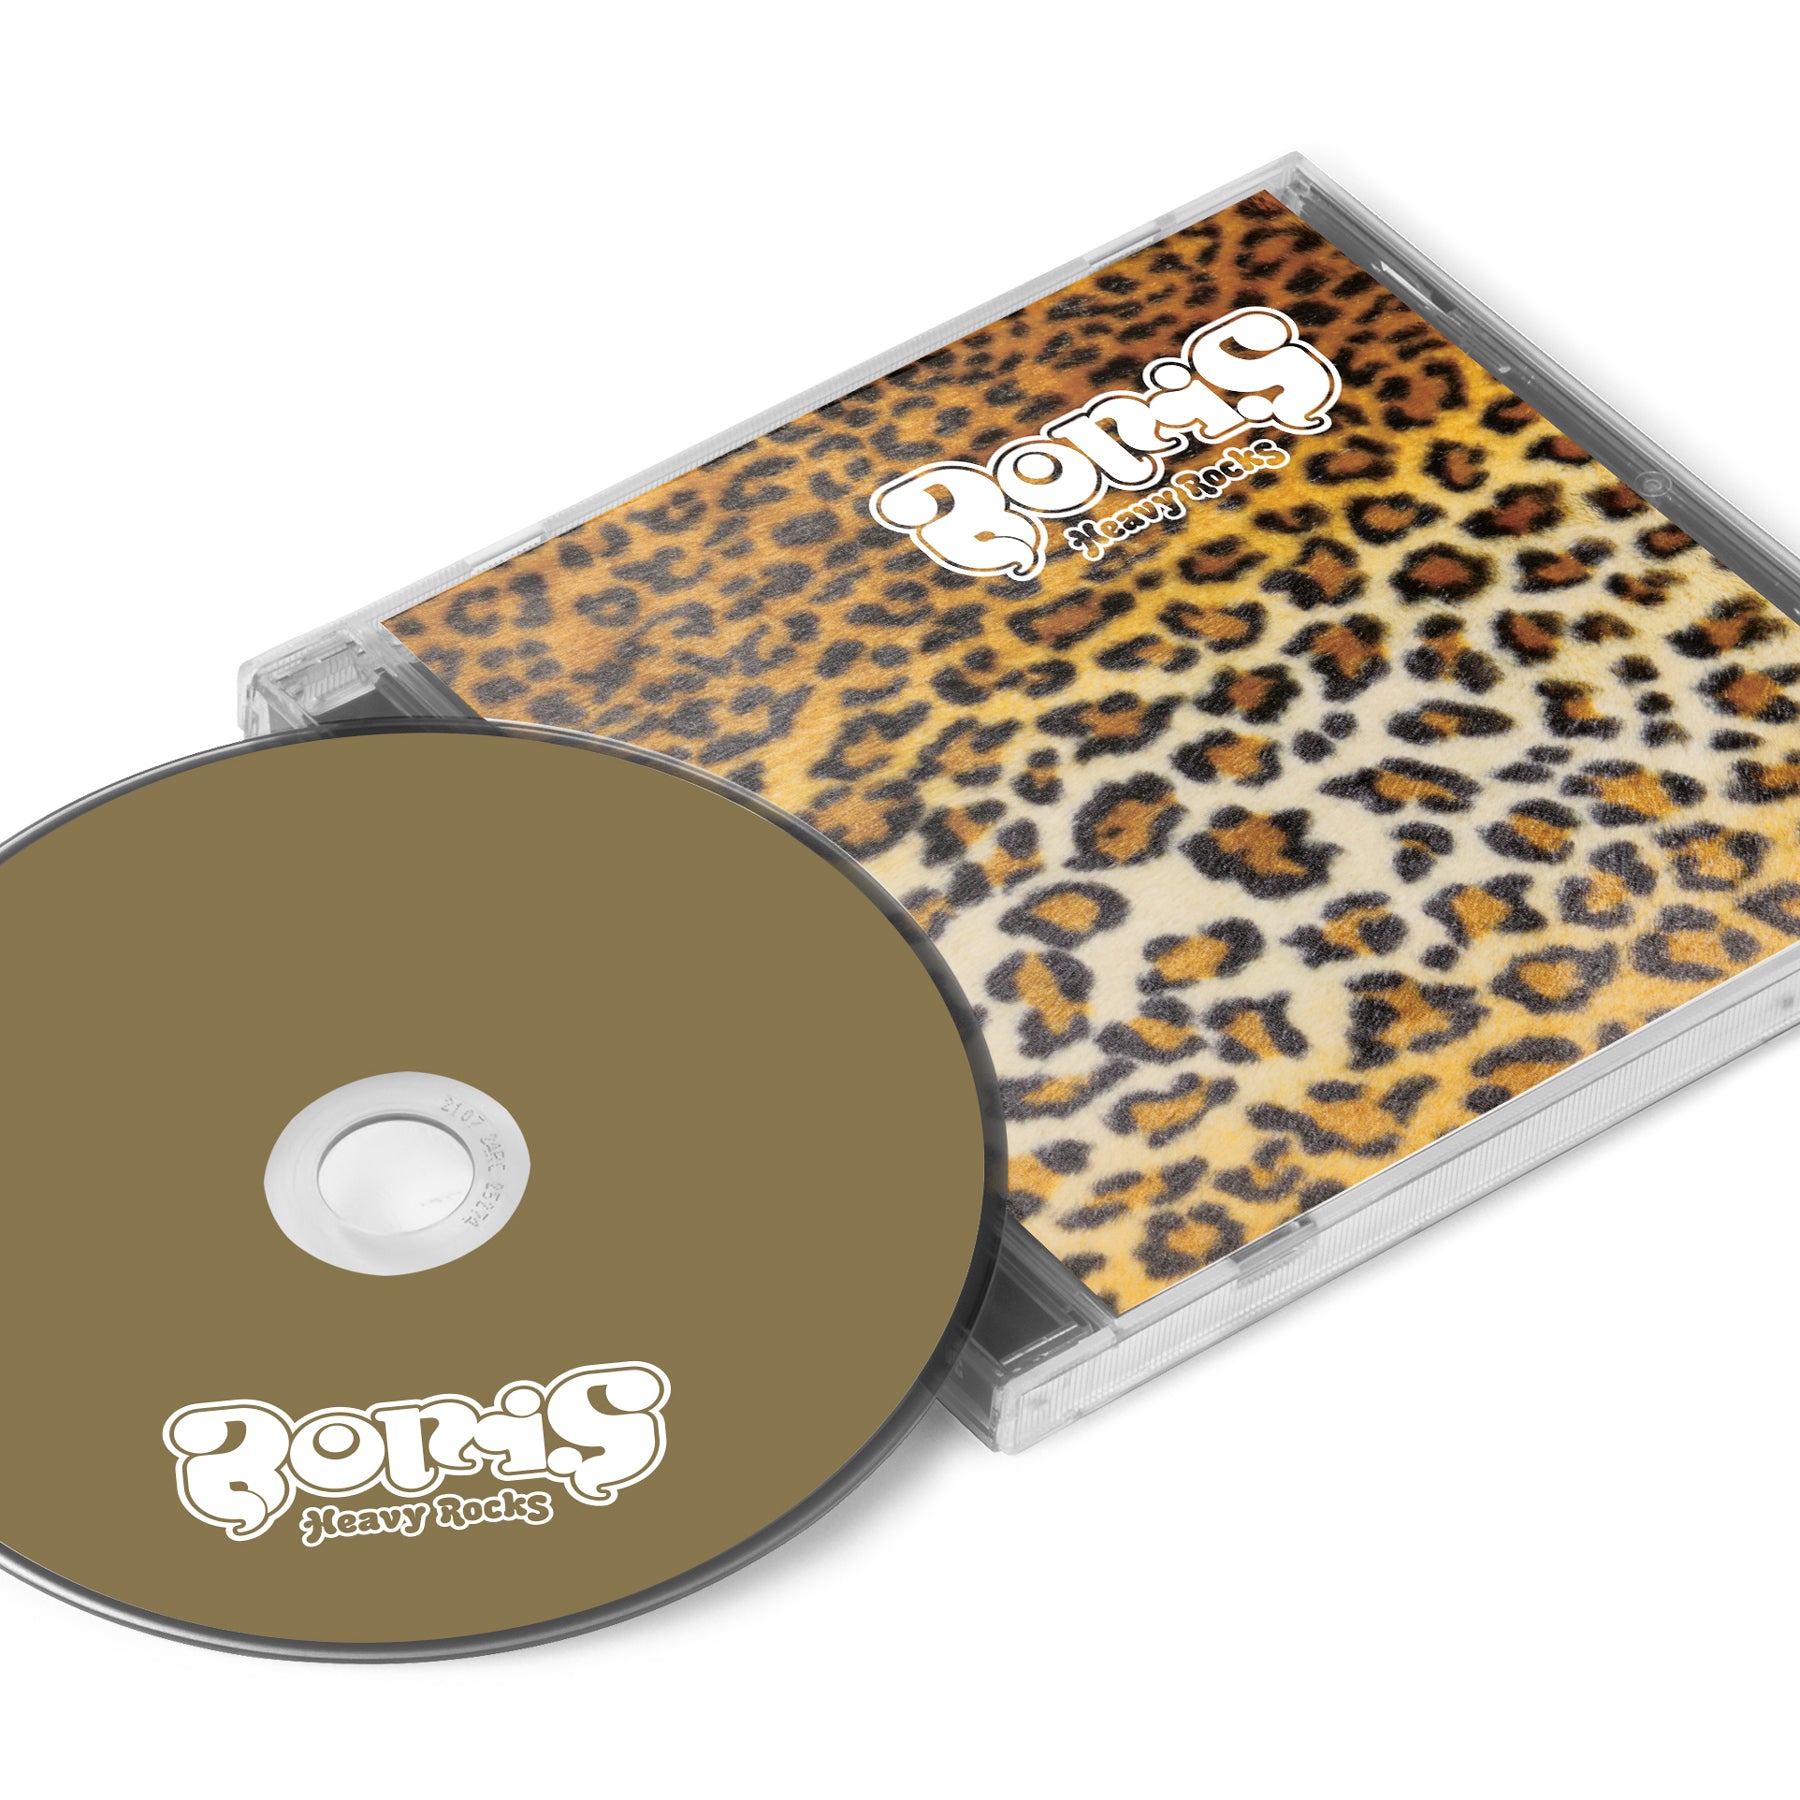 Boris "Heavy Rocks" CD